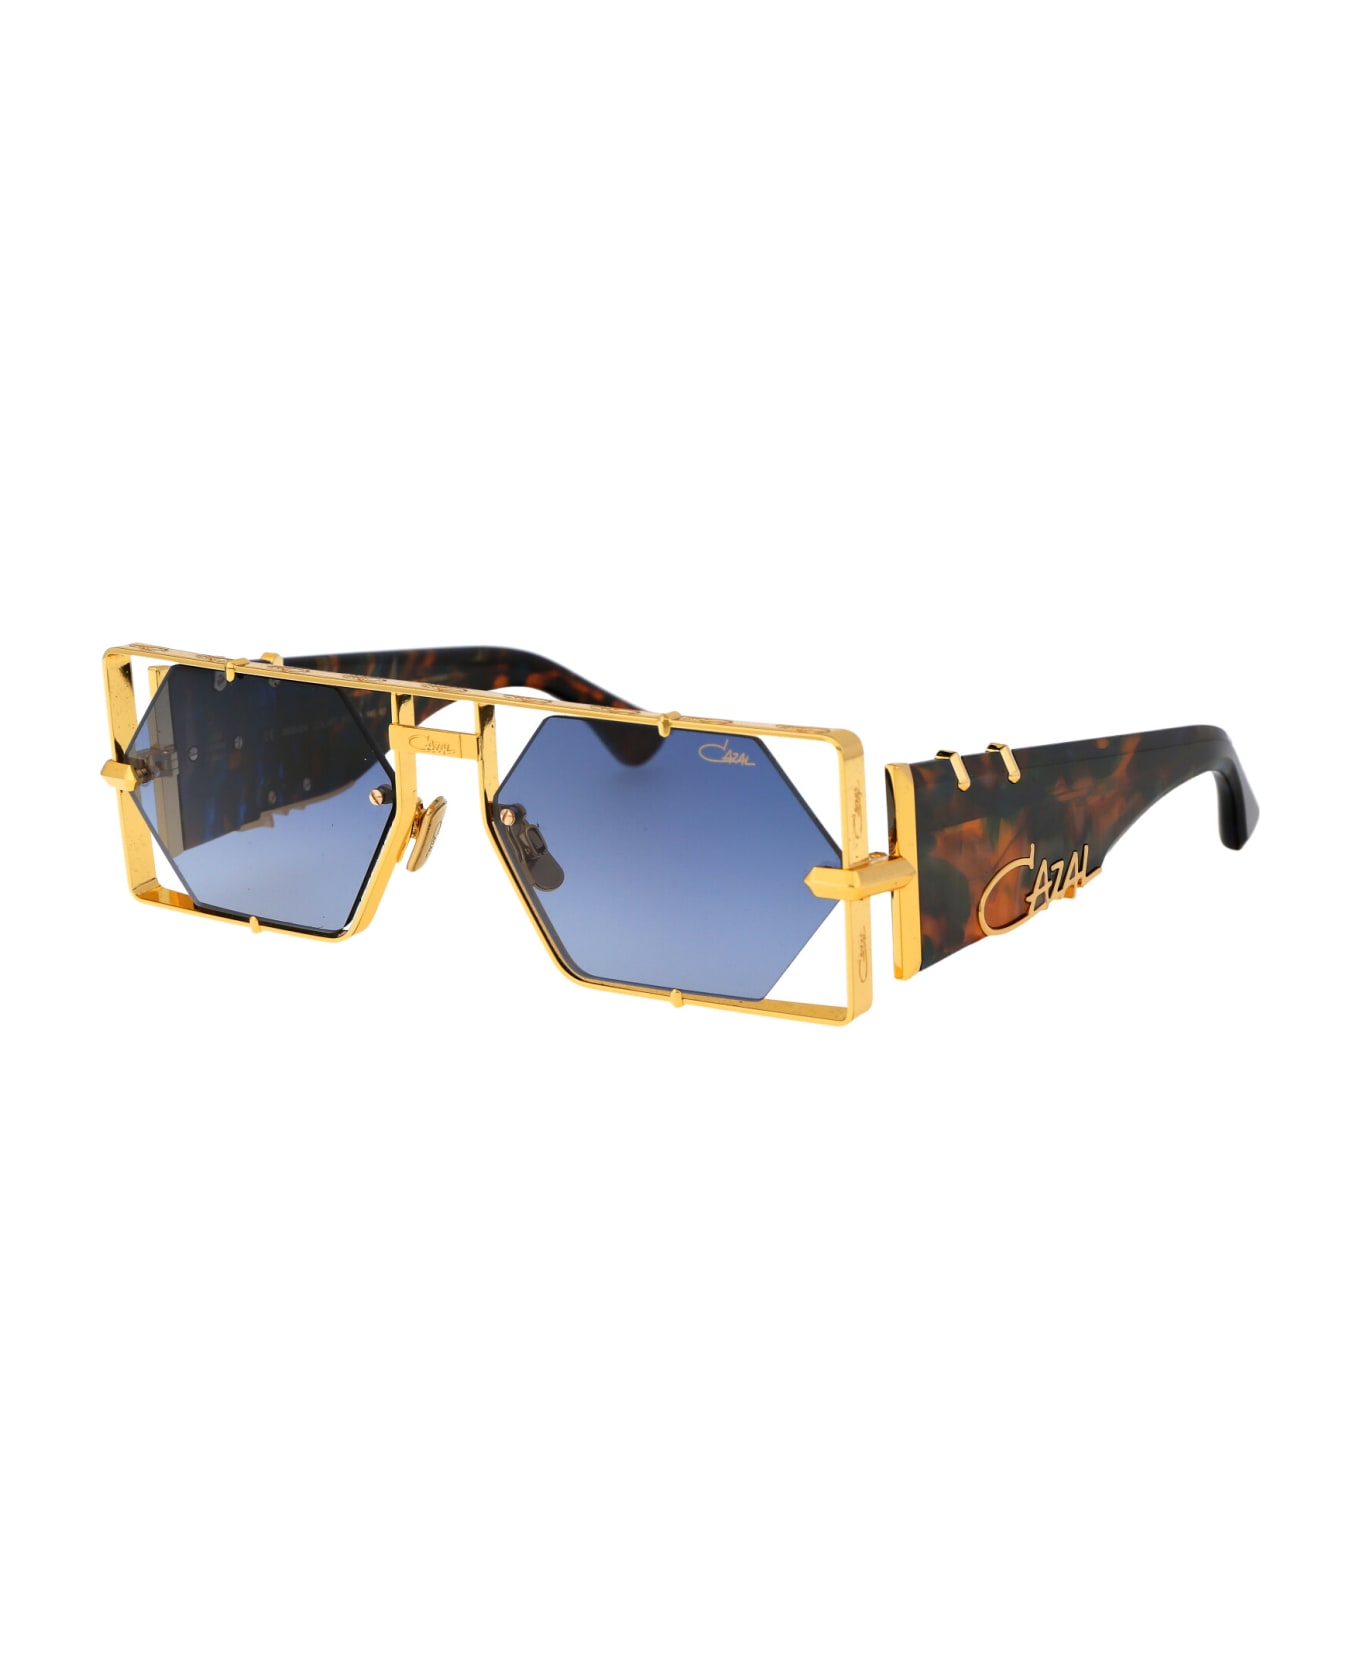 Cazal Mod. 004 Sunglasses - 002 GOLD HAVANA